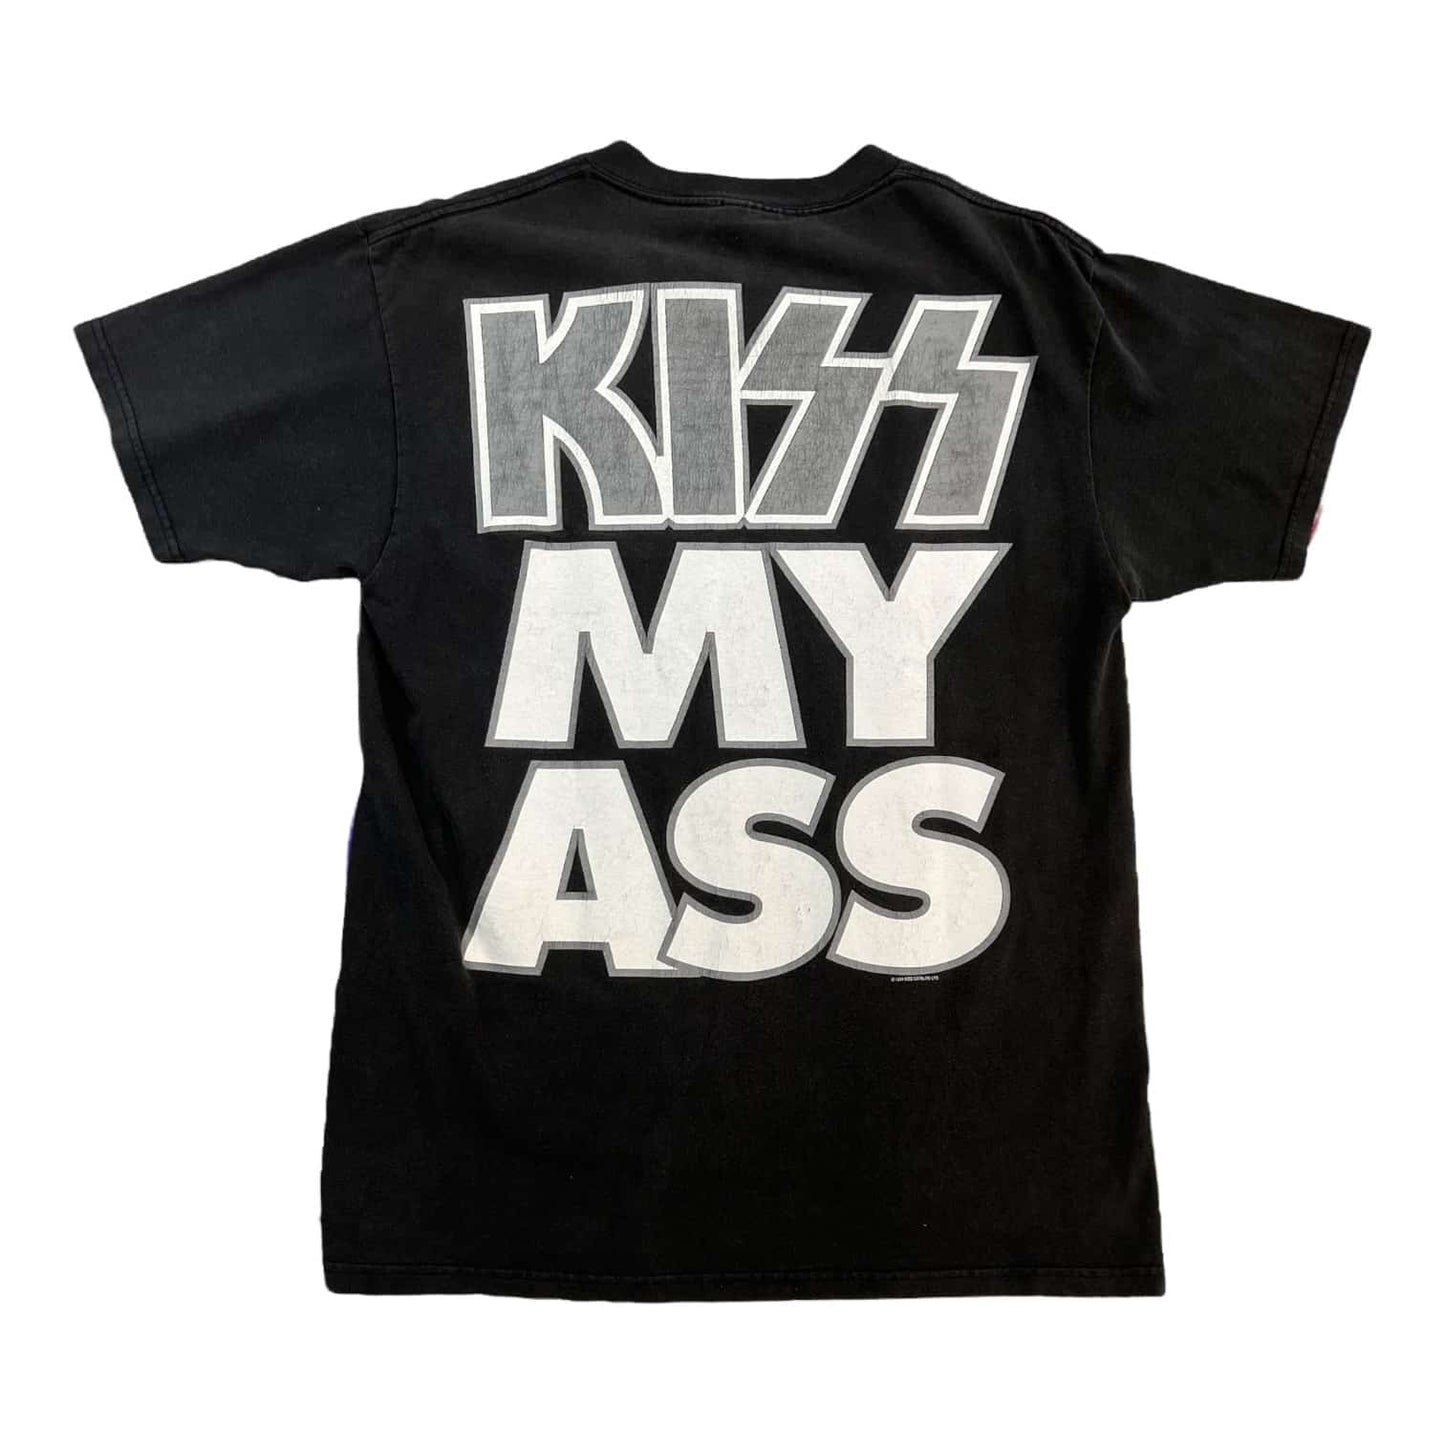 1994 KISS "Kiss my ass American dream" vintage tee